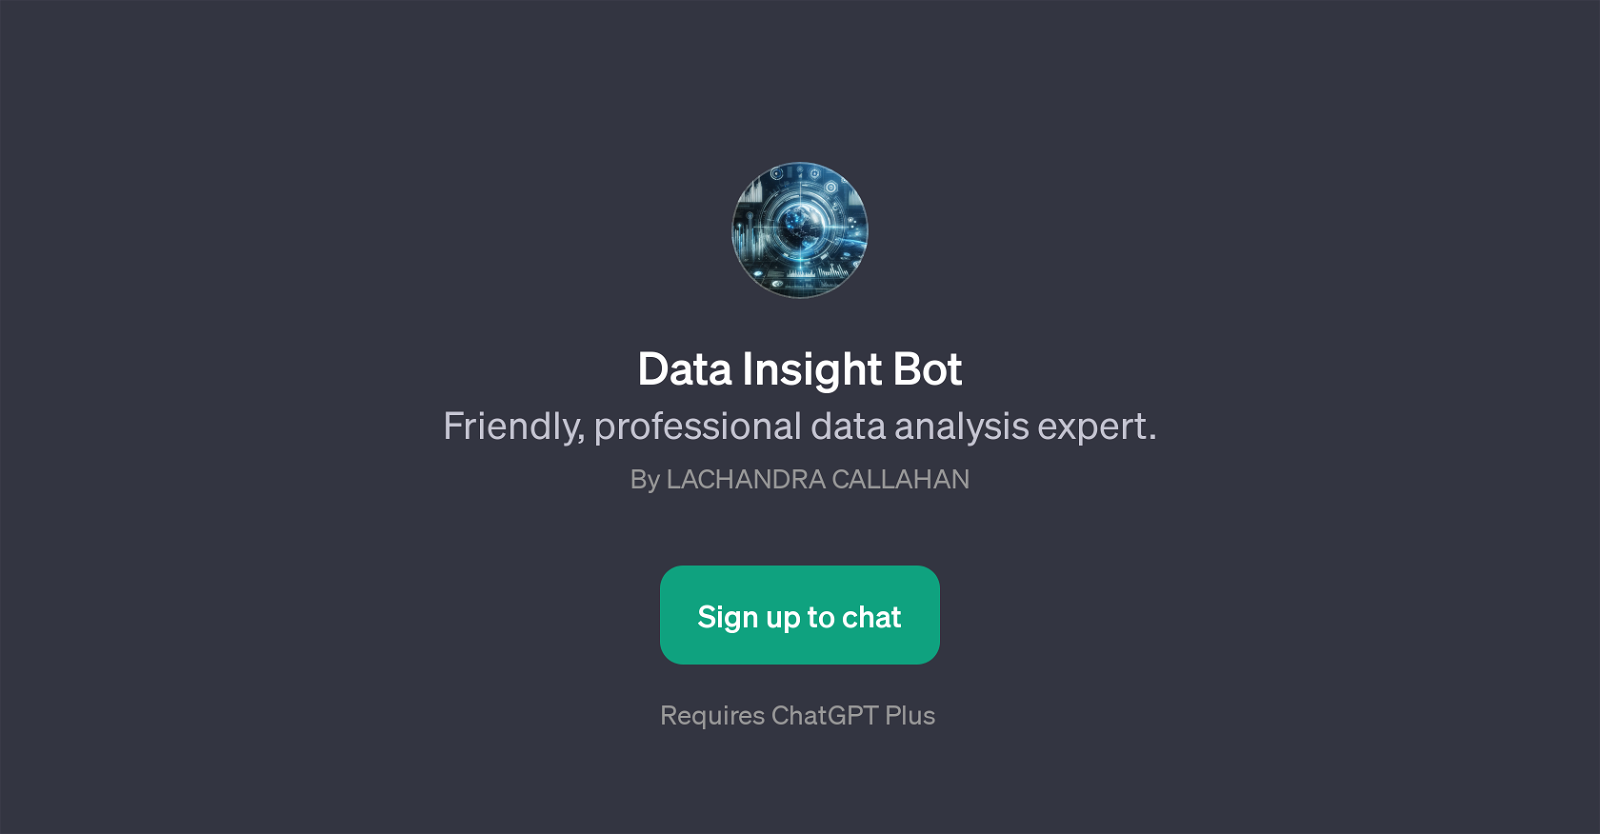 Data Insight Bot website